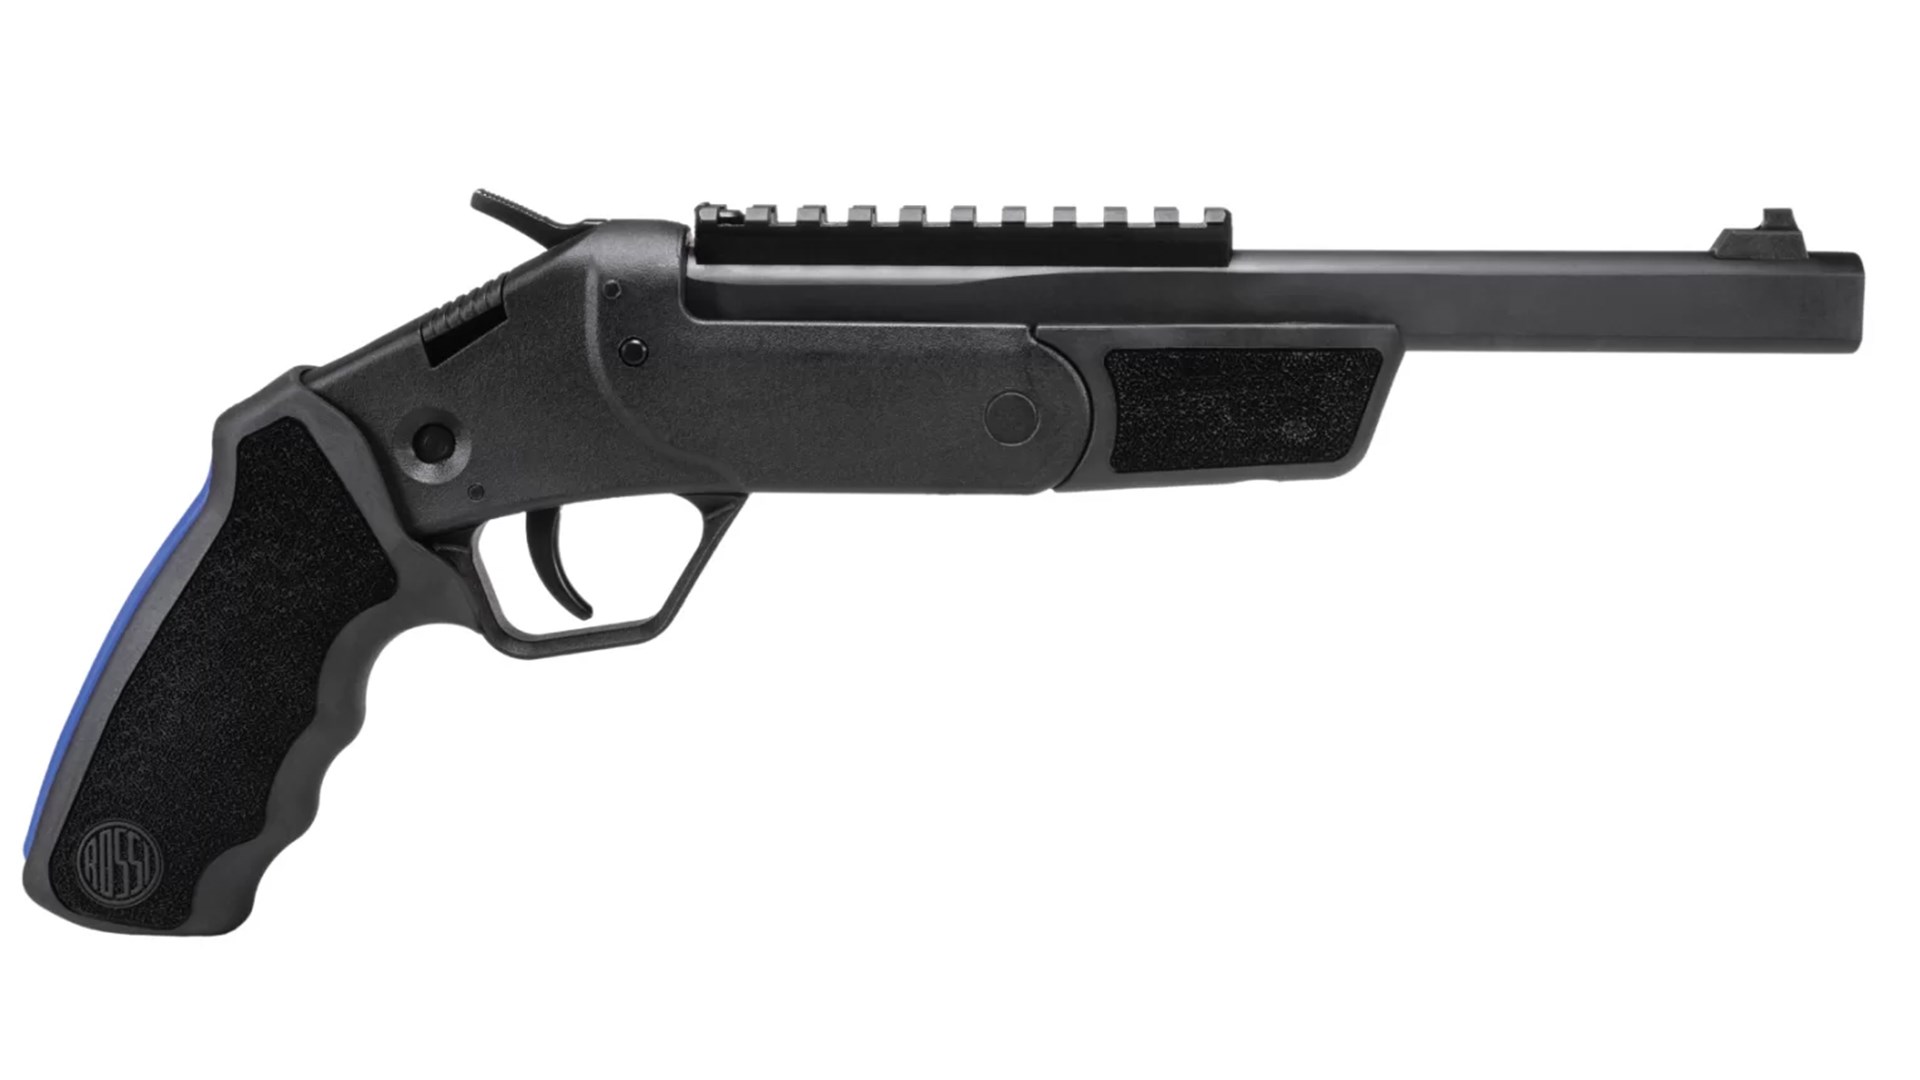 Right side of the all-black Rossi Brawler pistol.